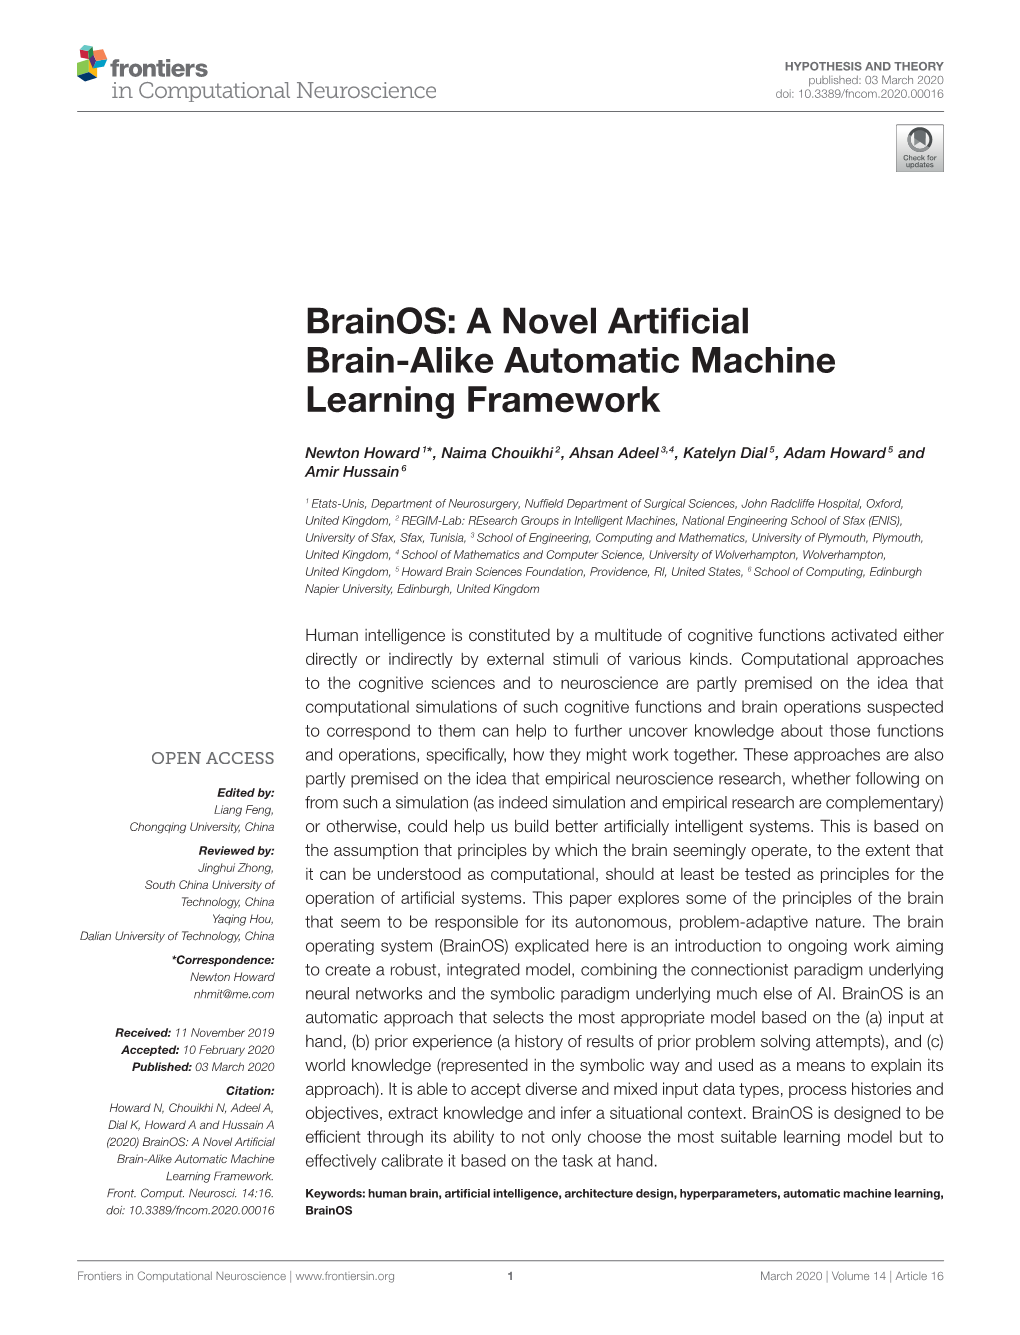 A Novel Artificial Brain-Alike Automatic Machine Learning Framework